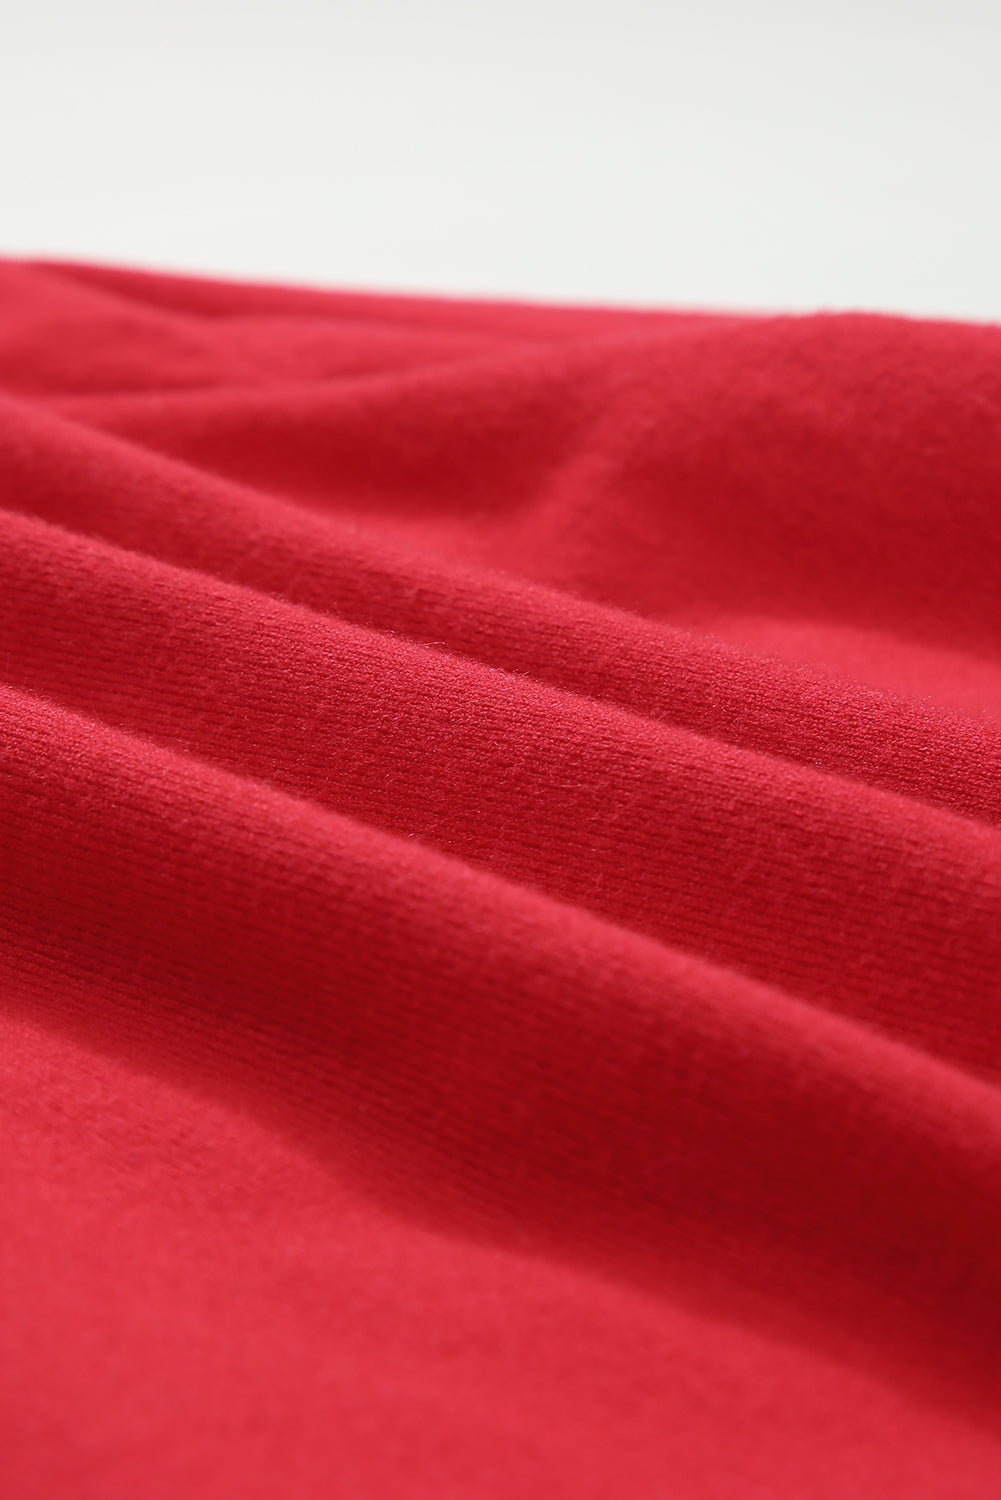 Ognjeno rdeč pulover Merry & Bright Graphic Contrast Trim